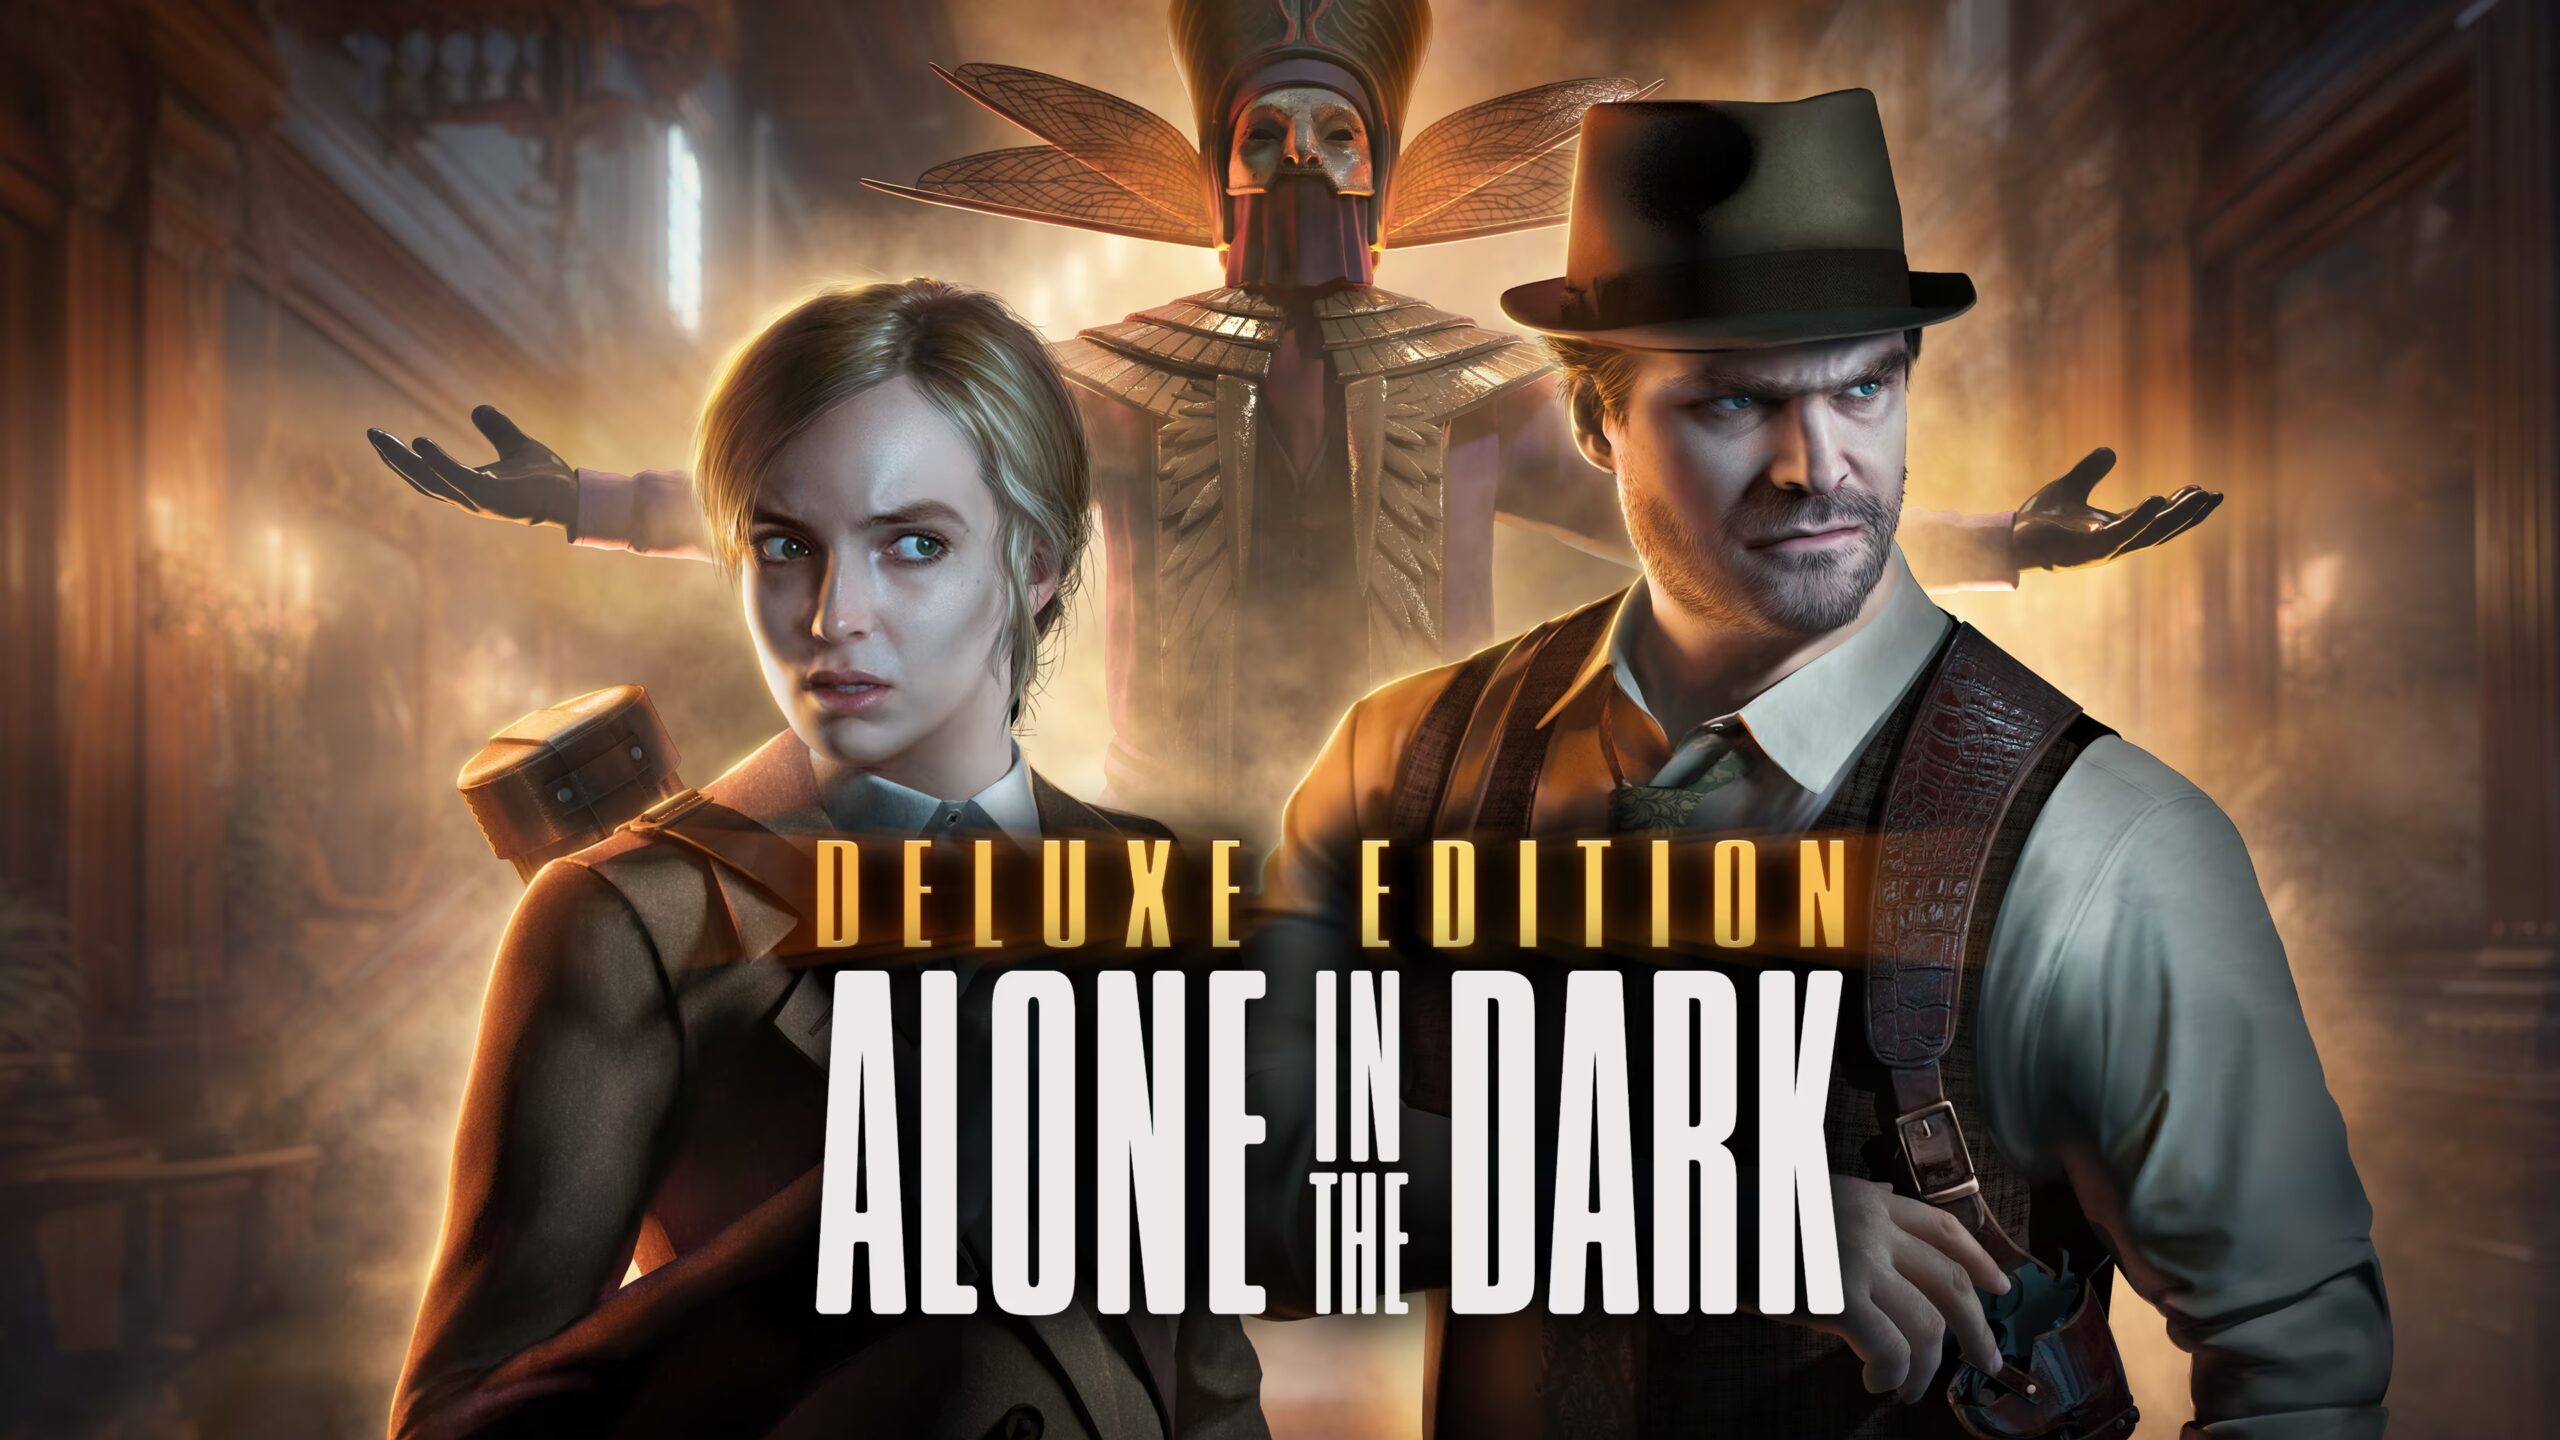 بررسی بازی Alone in the Dark